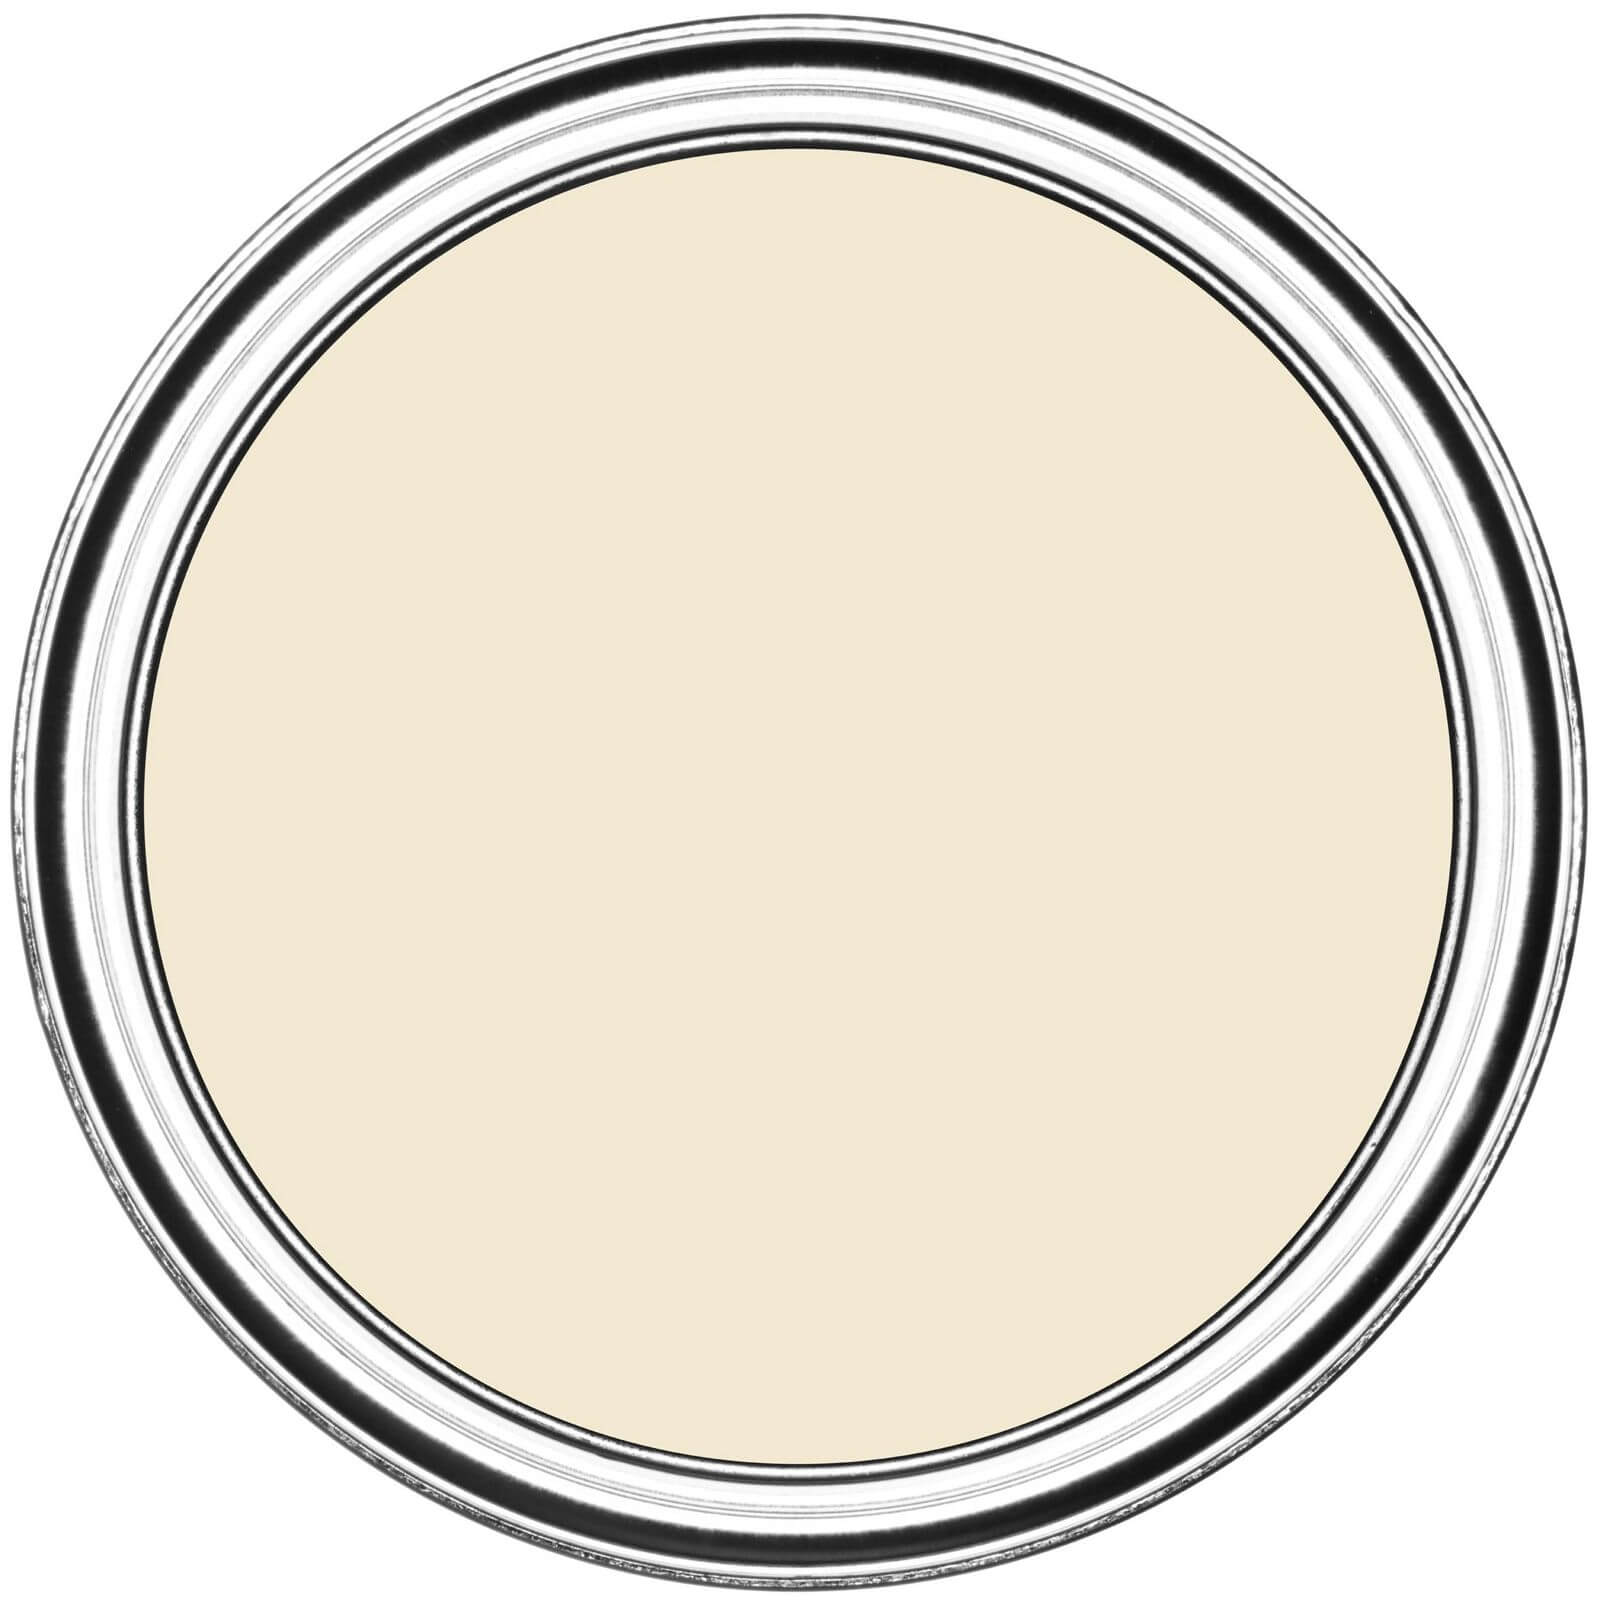 Rust-Oleum Universal All Surface Gloss Paint & Primer - Heirloom White - 250ml